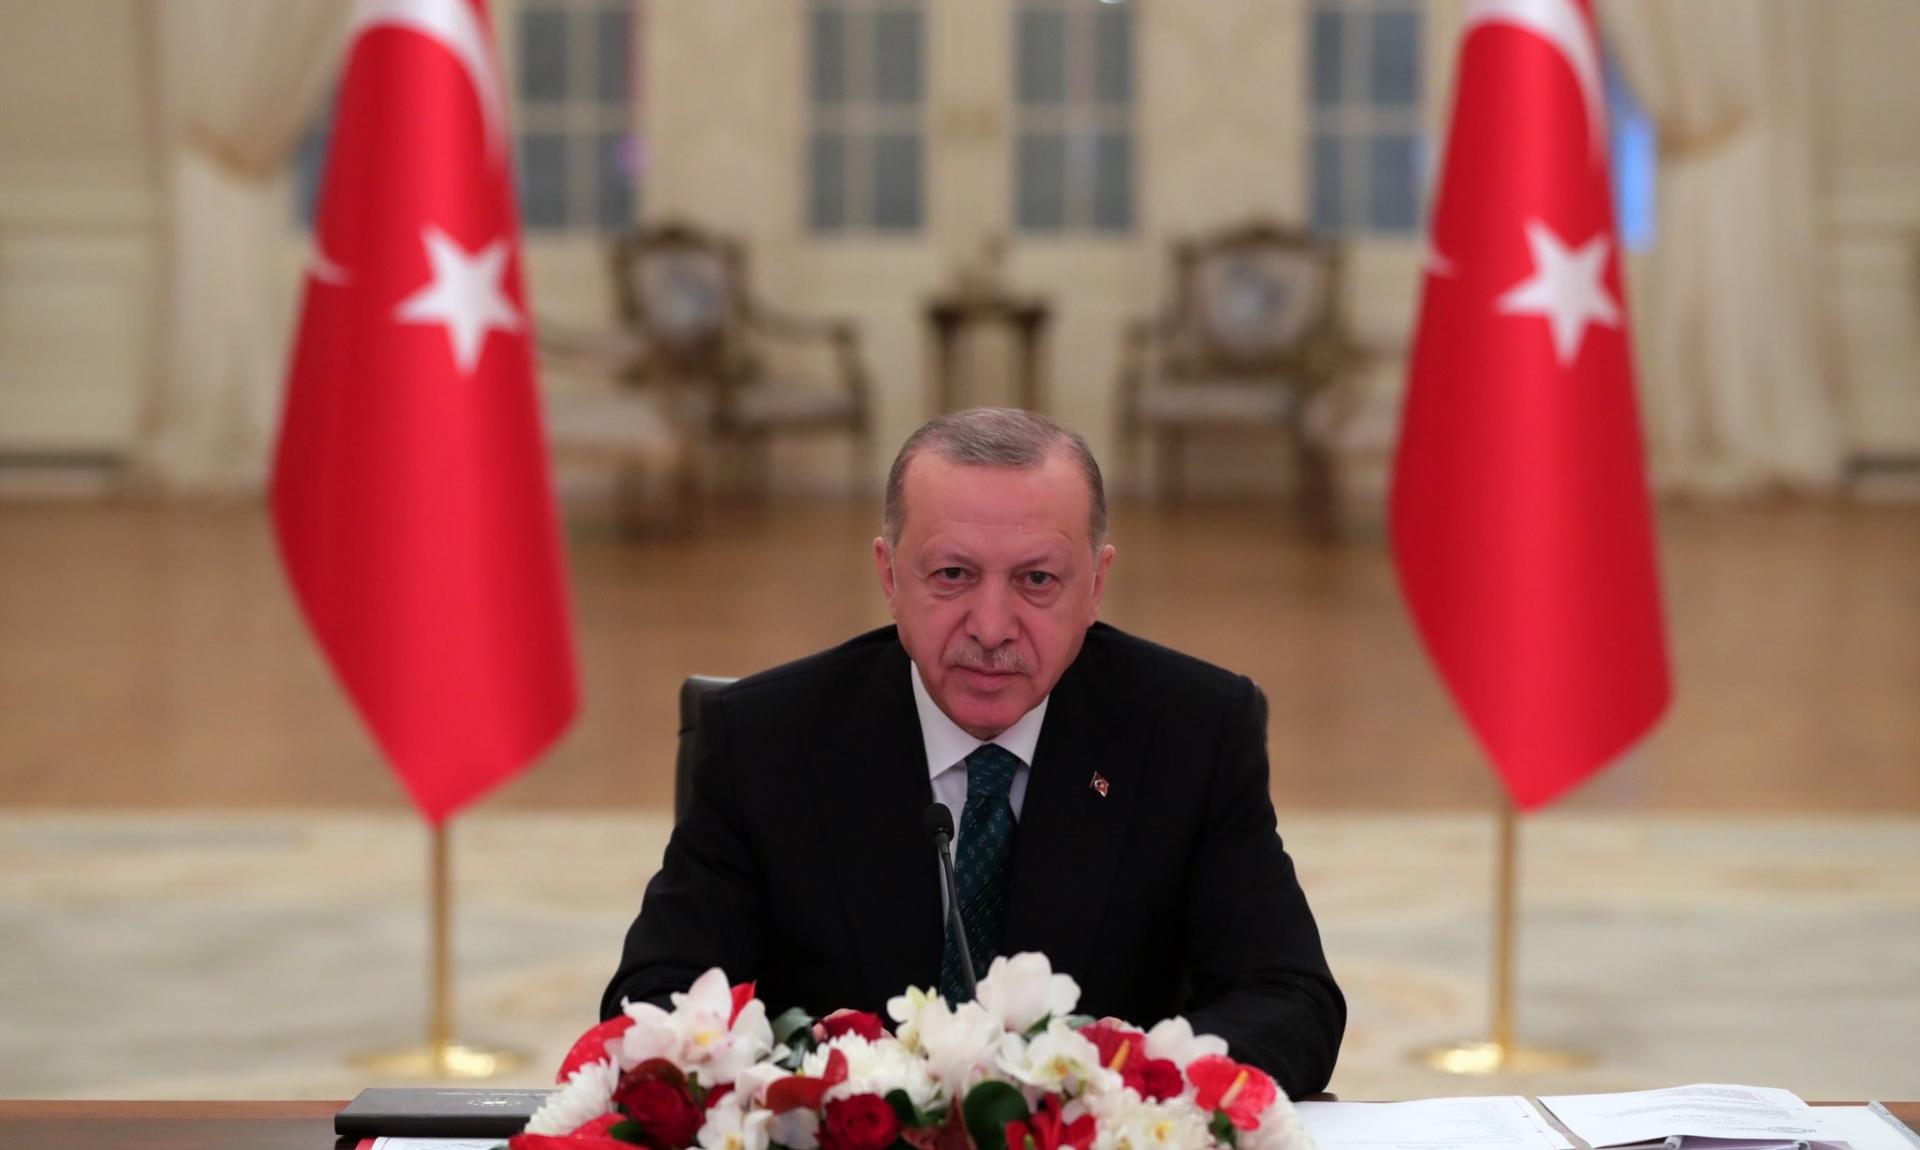 Ýokary Geňeşiň maslahaty Prezident Erdoganyň ýolbaşçylygynda geçirildi